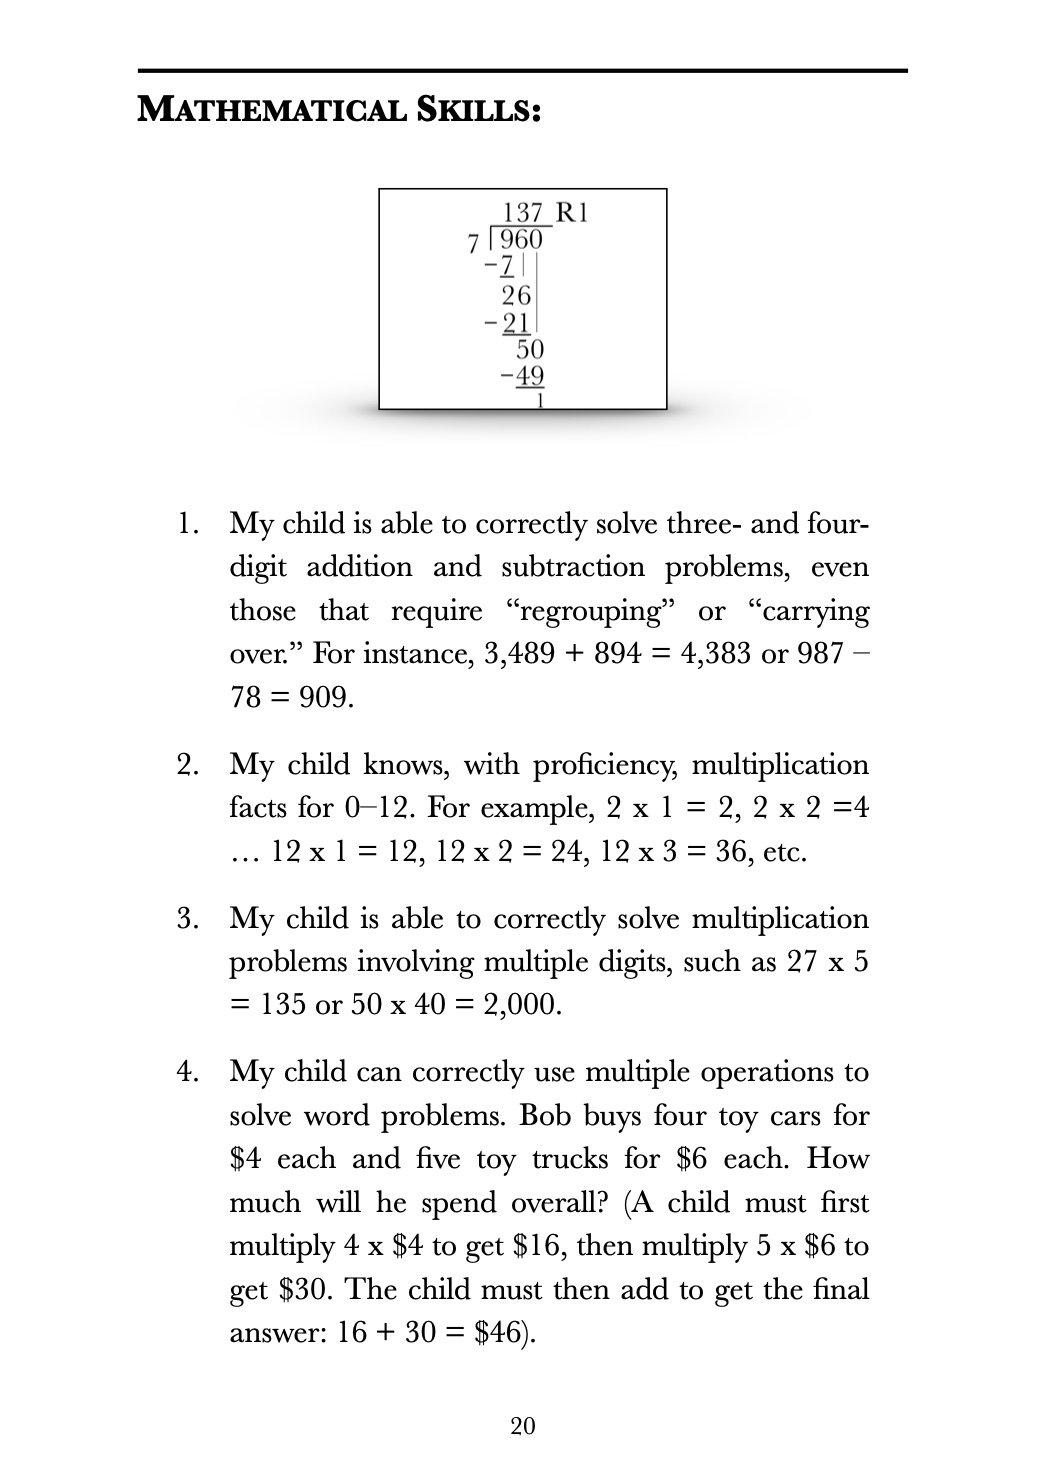 4th grade mathematical skills .jpg